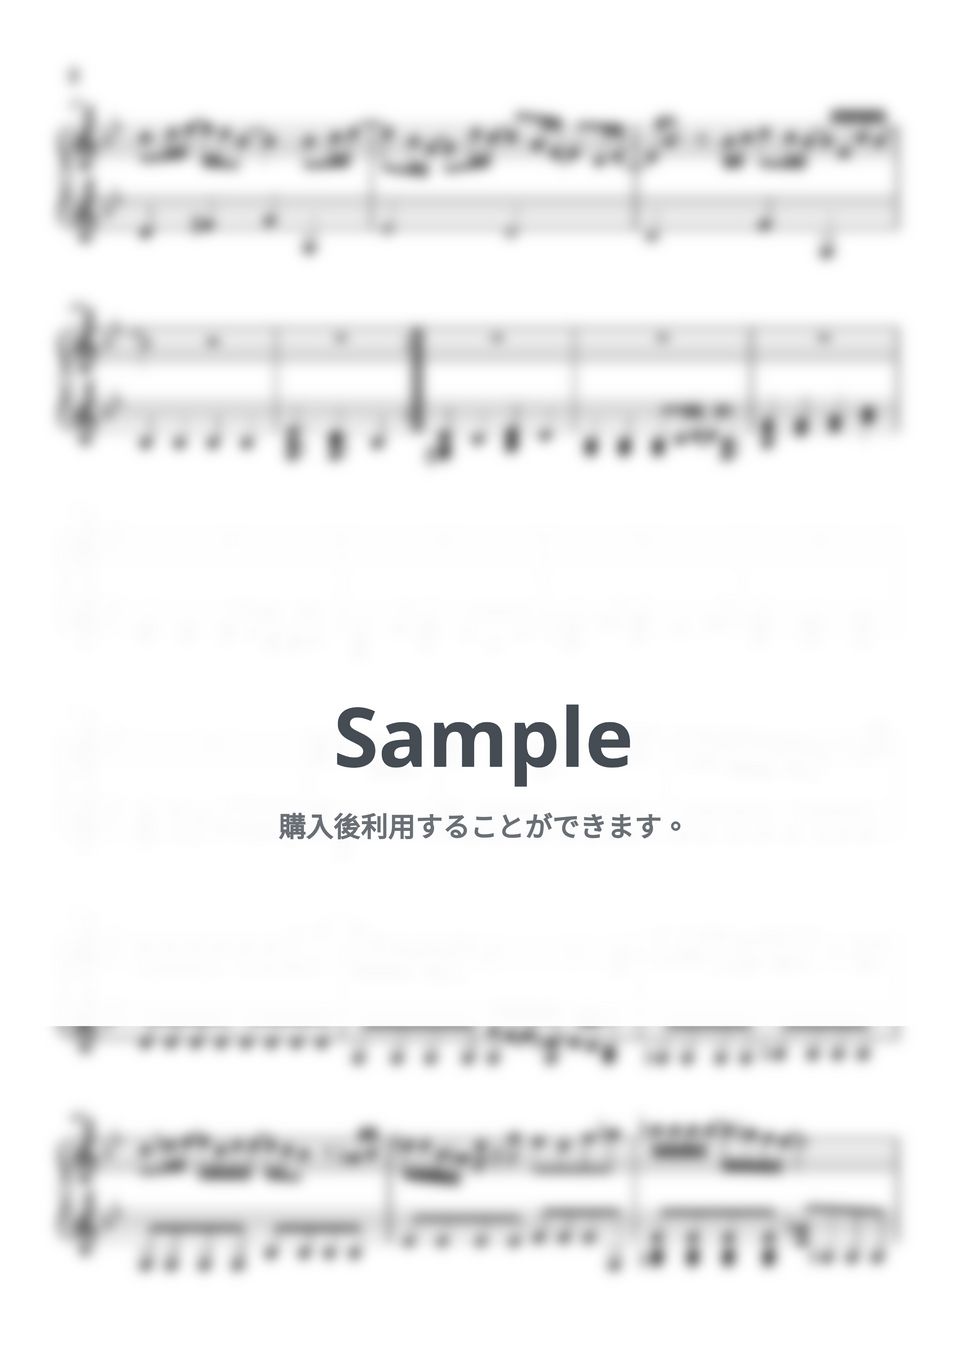 大橋 卓弥 - 奏 (トイピアノ / 32鍵盤 / J-POP) by 川西 三裕